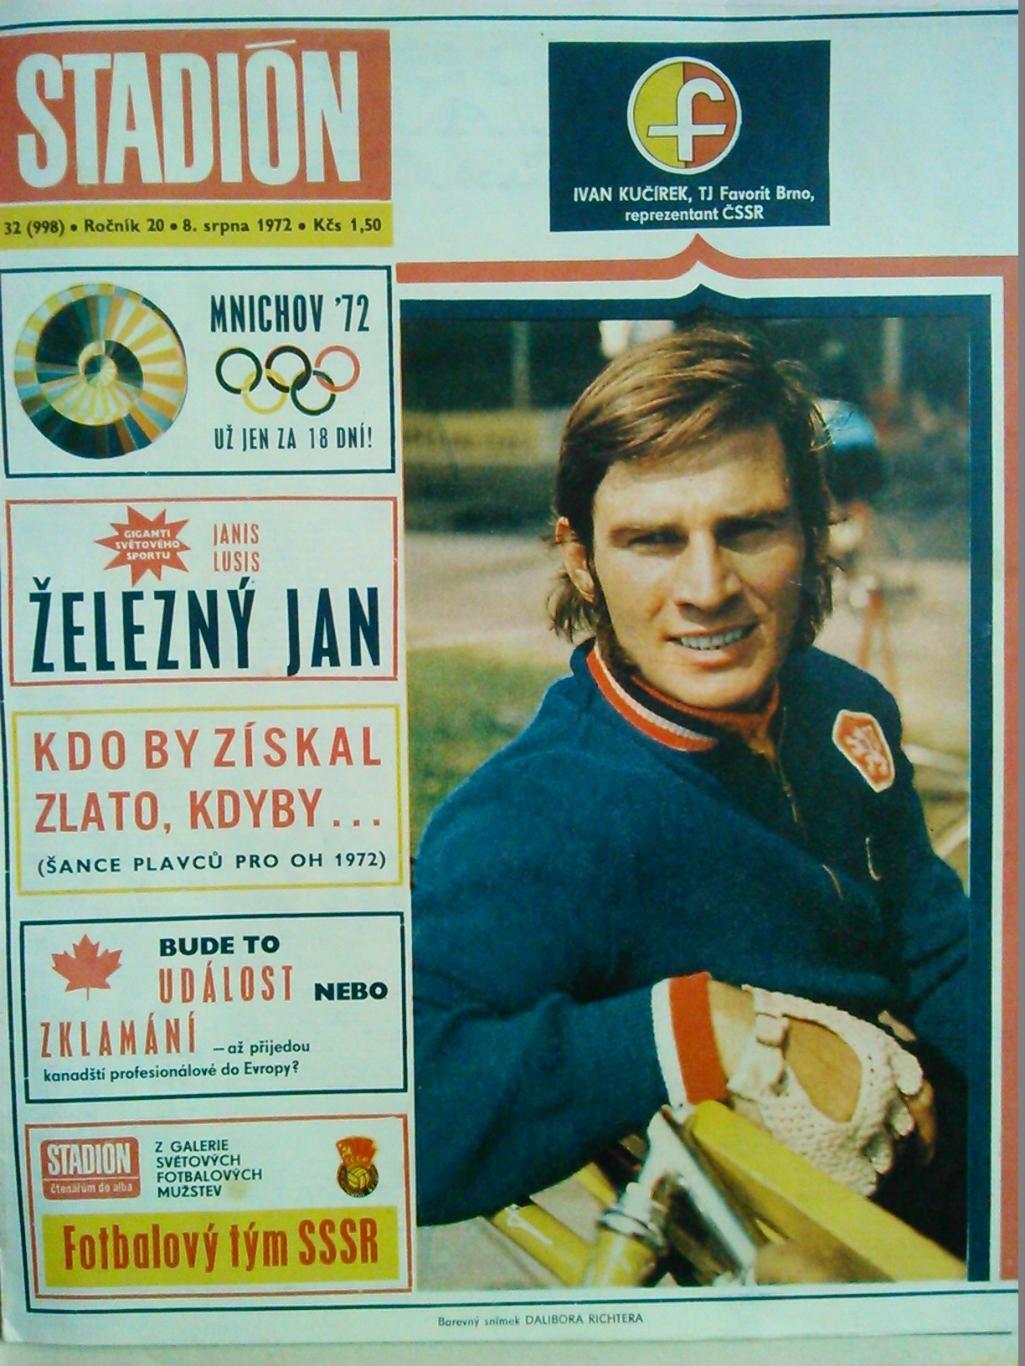 Stadion (Стадион).№ 32 (998) 1972 (Чех.) Хоккей-НХЛ. Футбол. Оптом cкидки 50%!